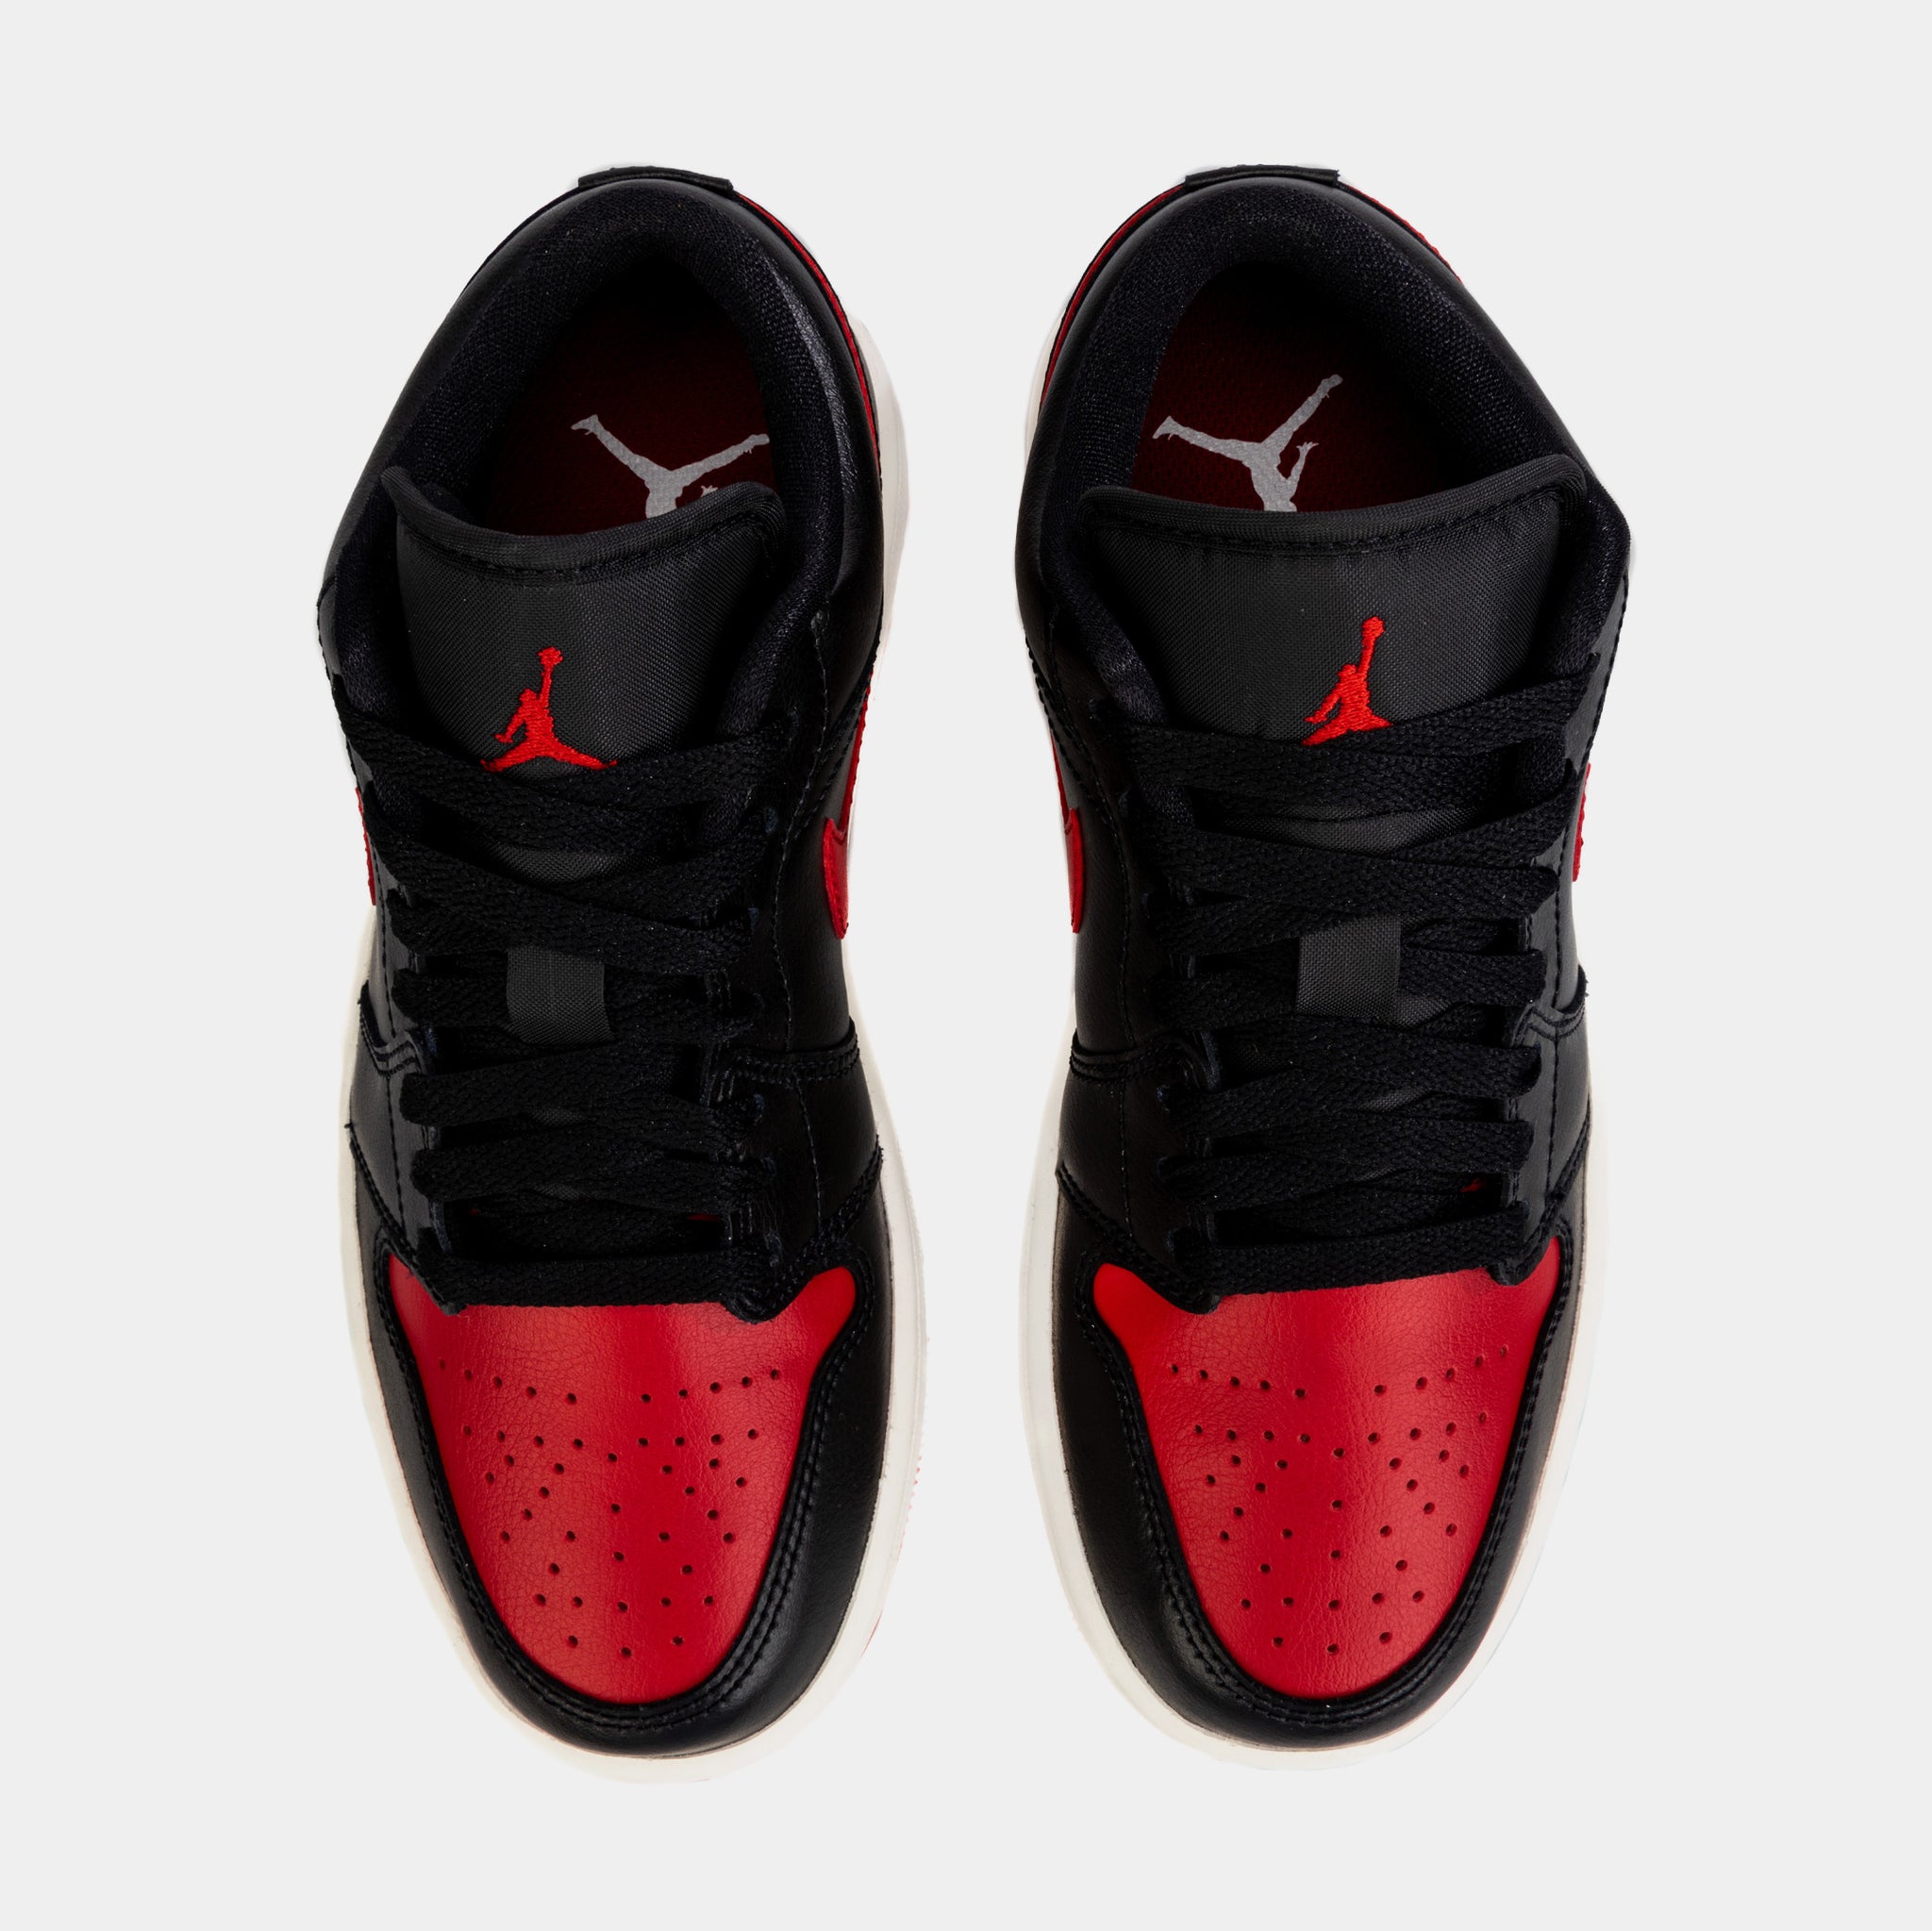 Air Jordan 1 Retro Low Bred Sail Womens Lifestyle Shoes (Black/Red)